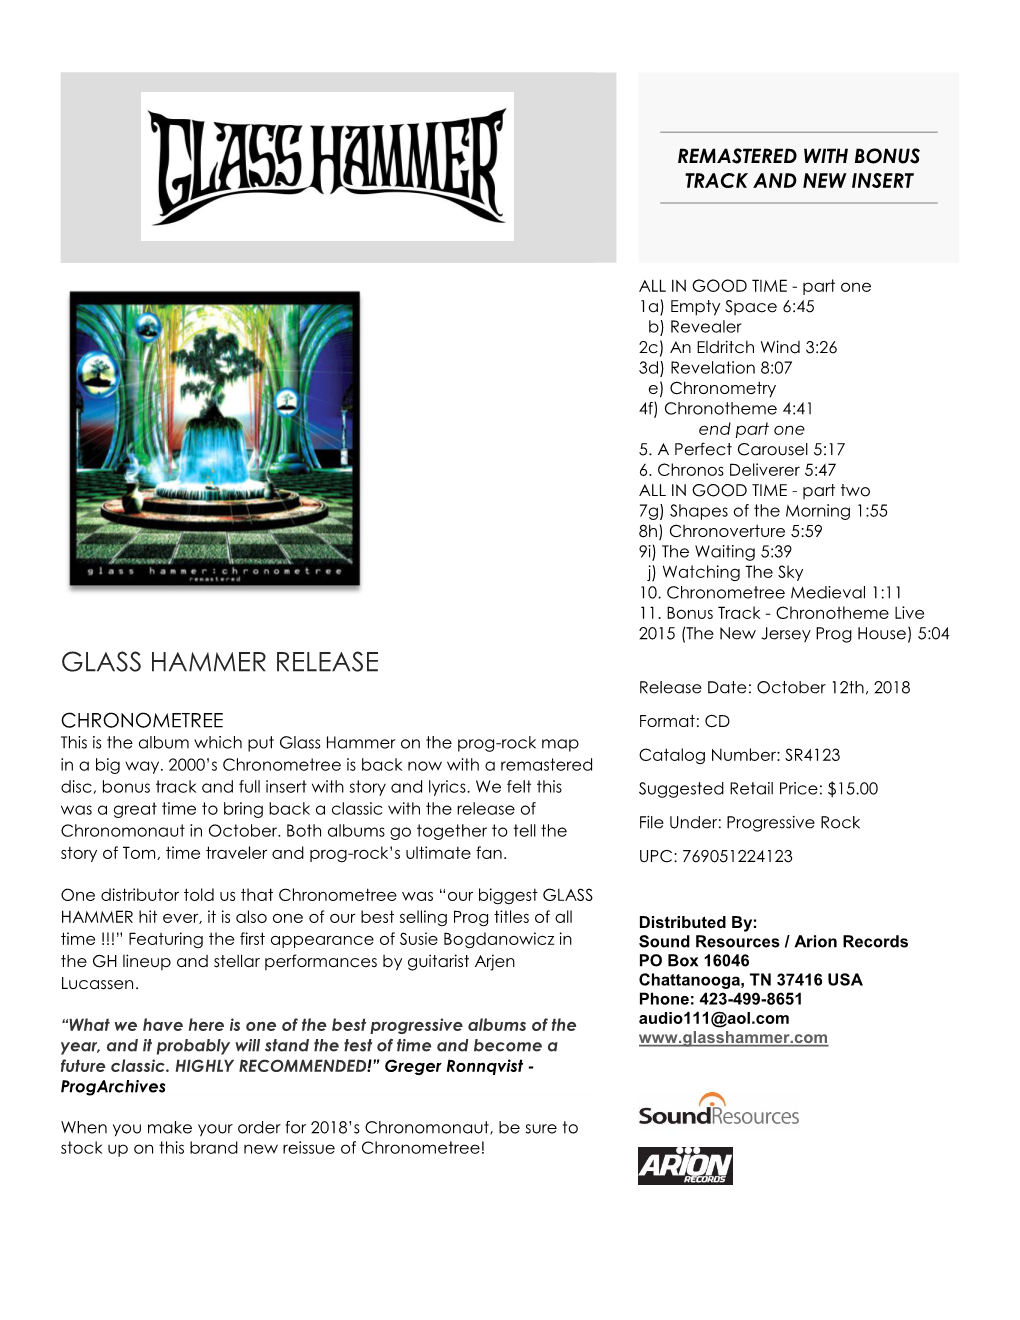 Glass Hammer Chronometree Remastered 1-Sheet